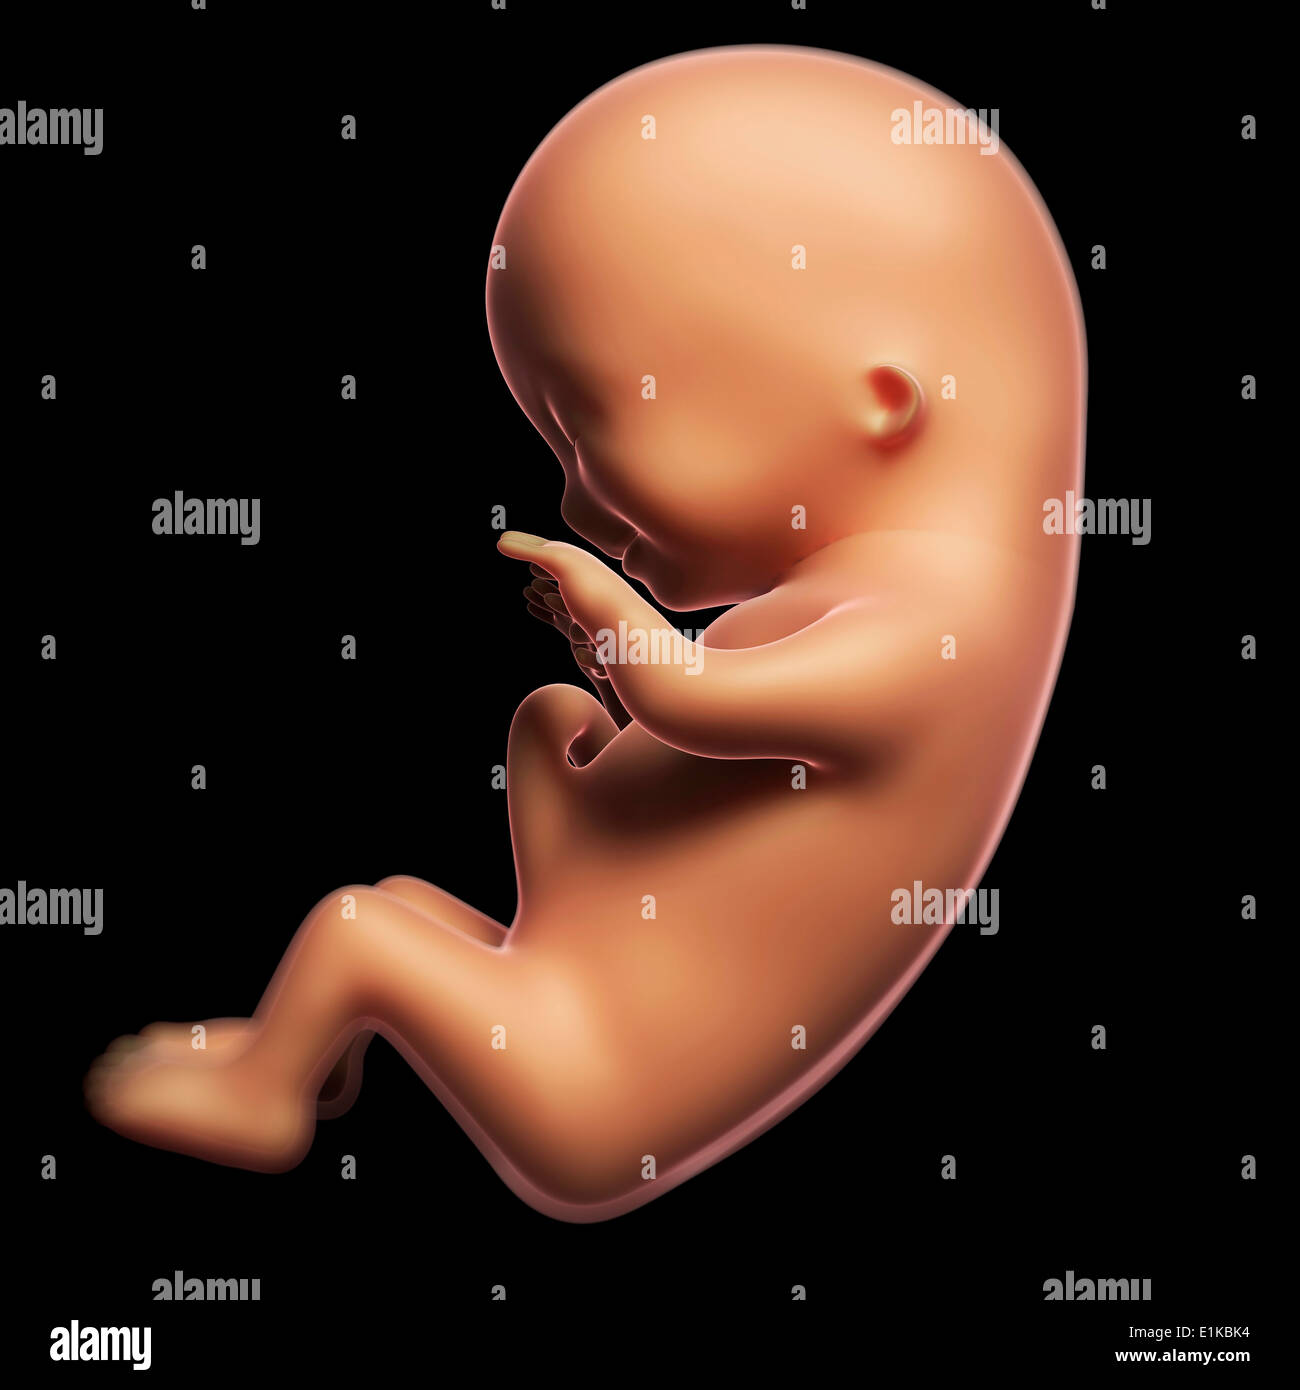 Foetus at 3 months computer artwork. Stock Photo